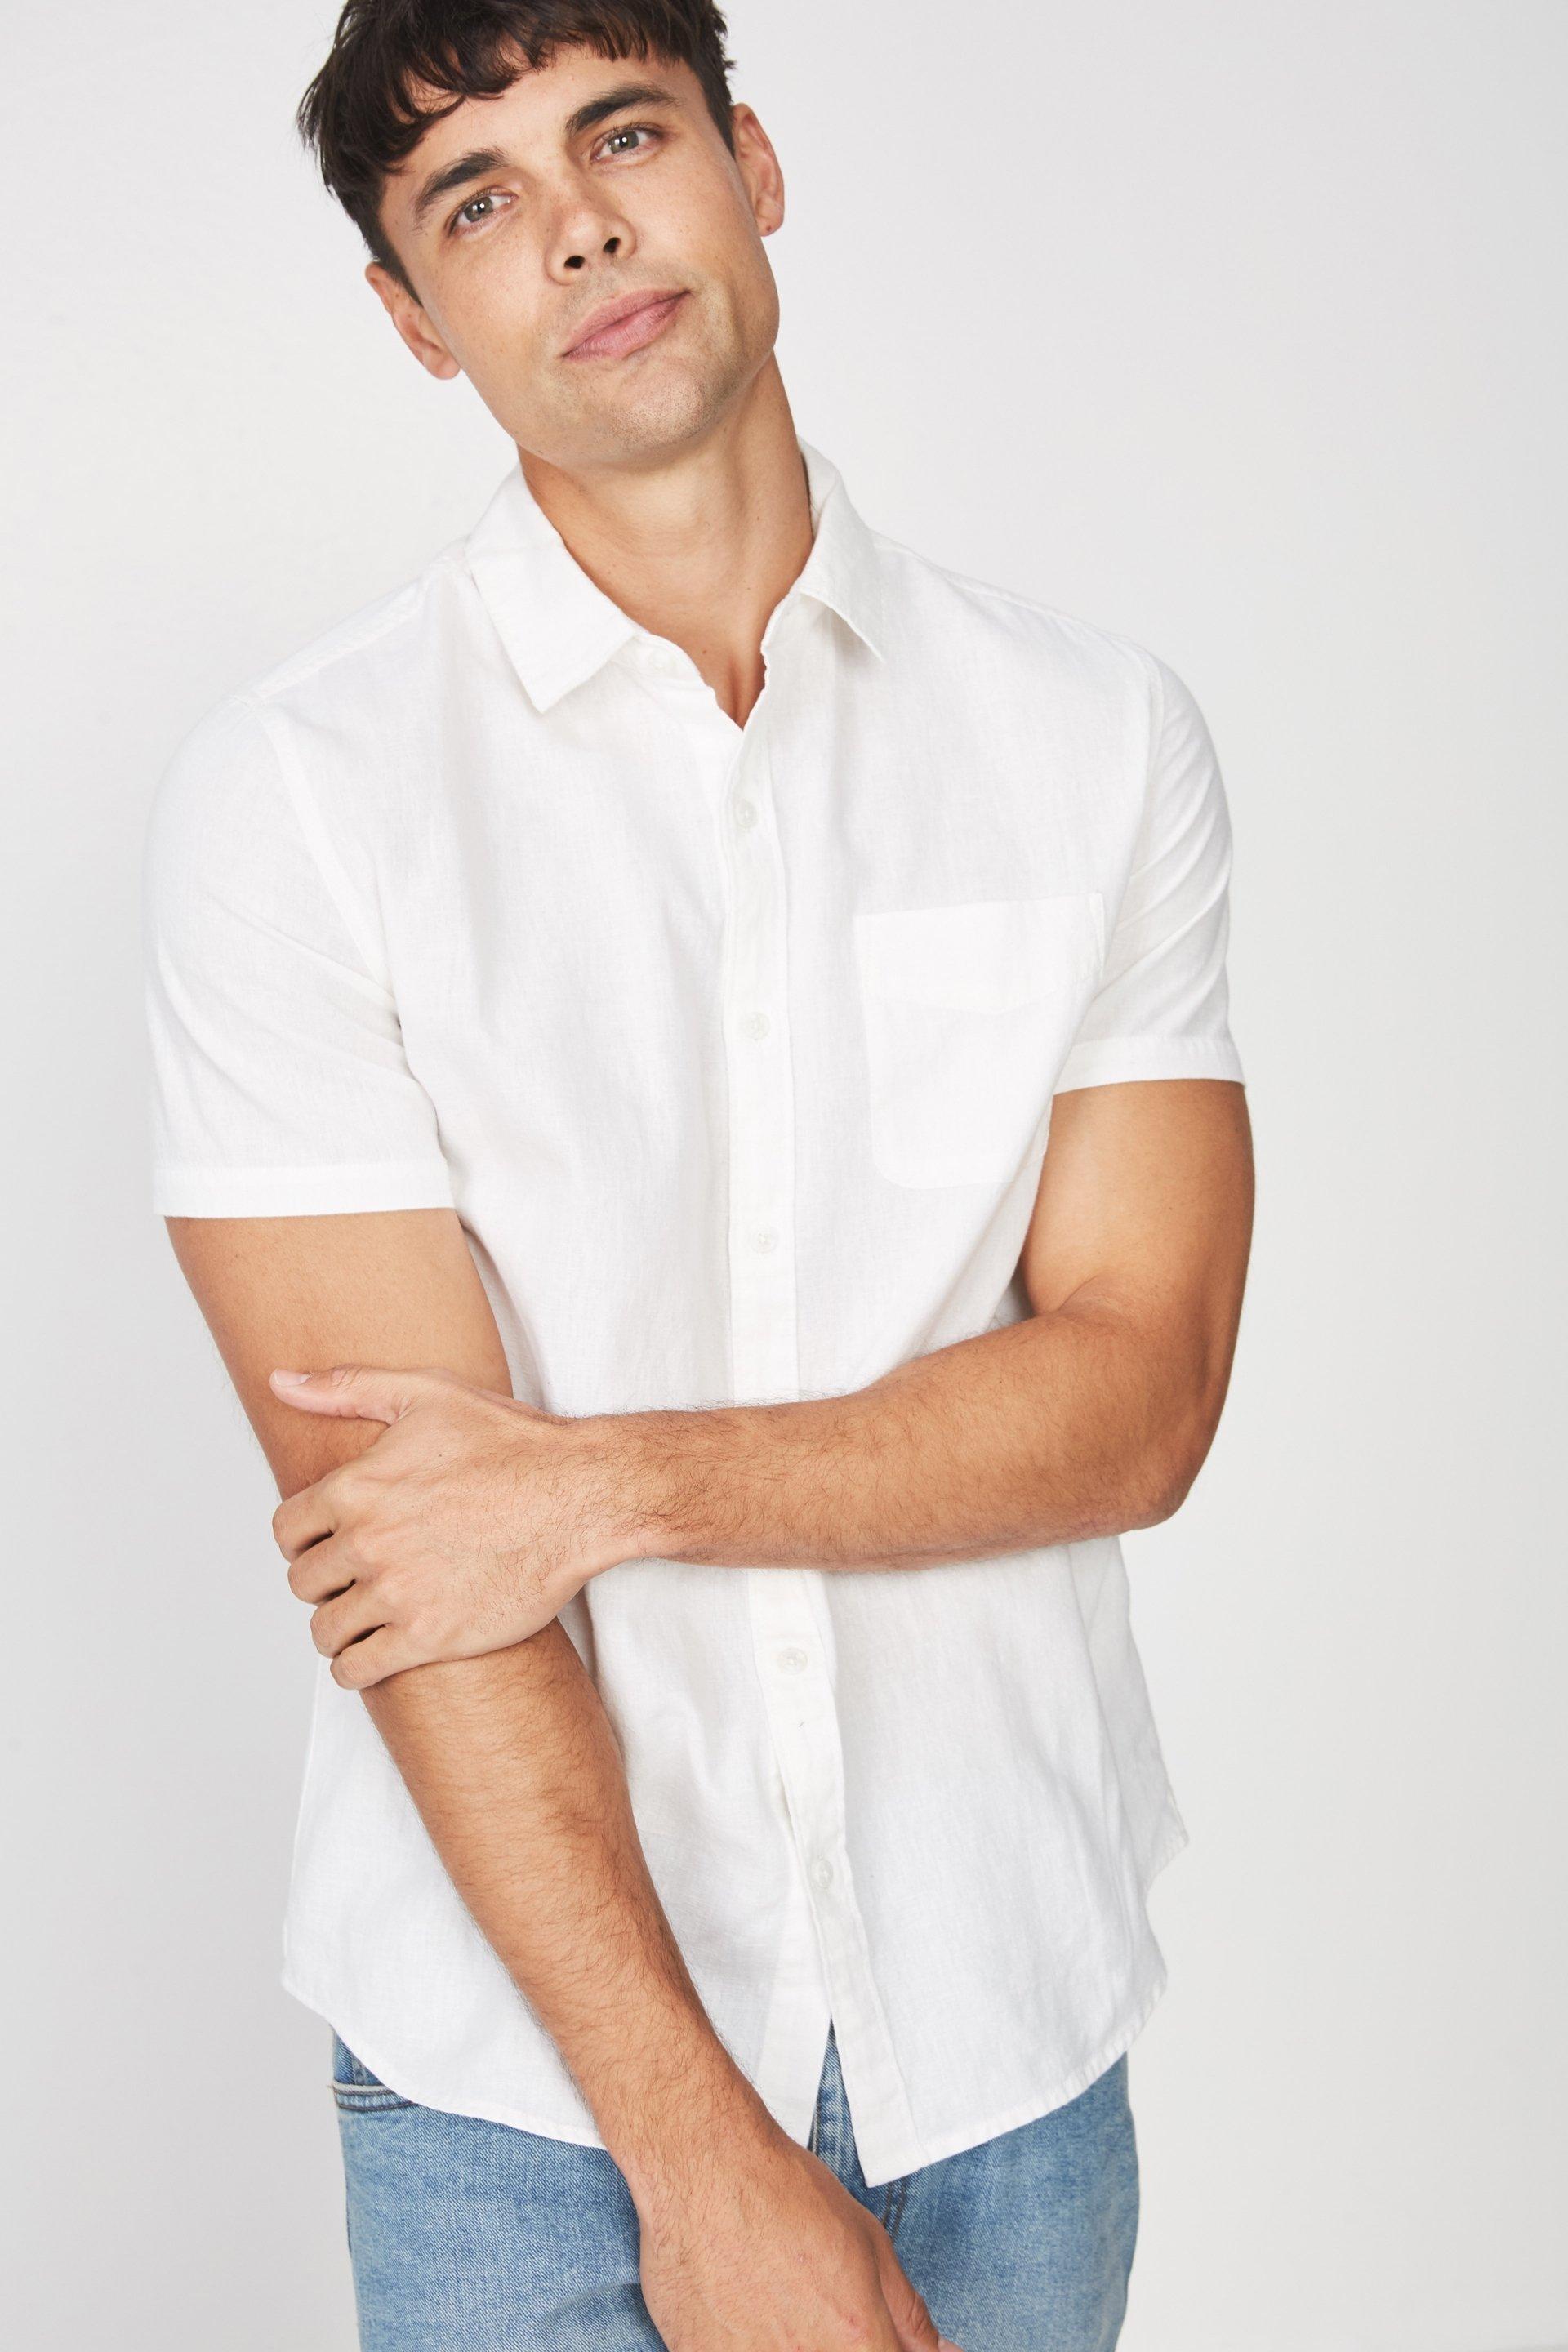 Linen cotton short sleeve shirt - white Cotton On Shirts | Superbalist.com